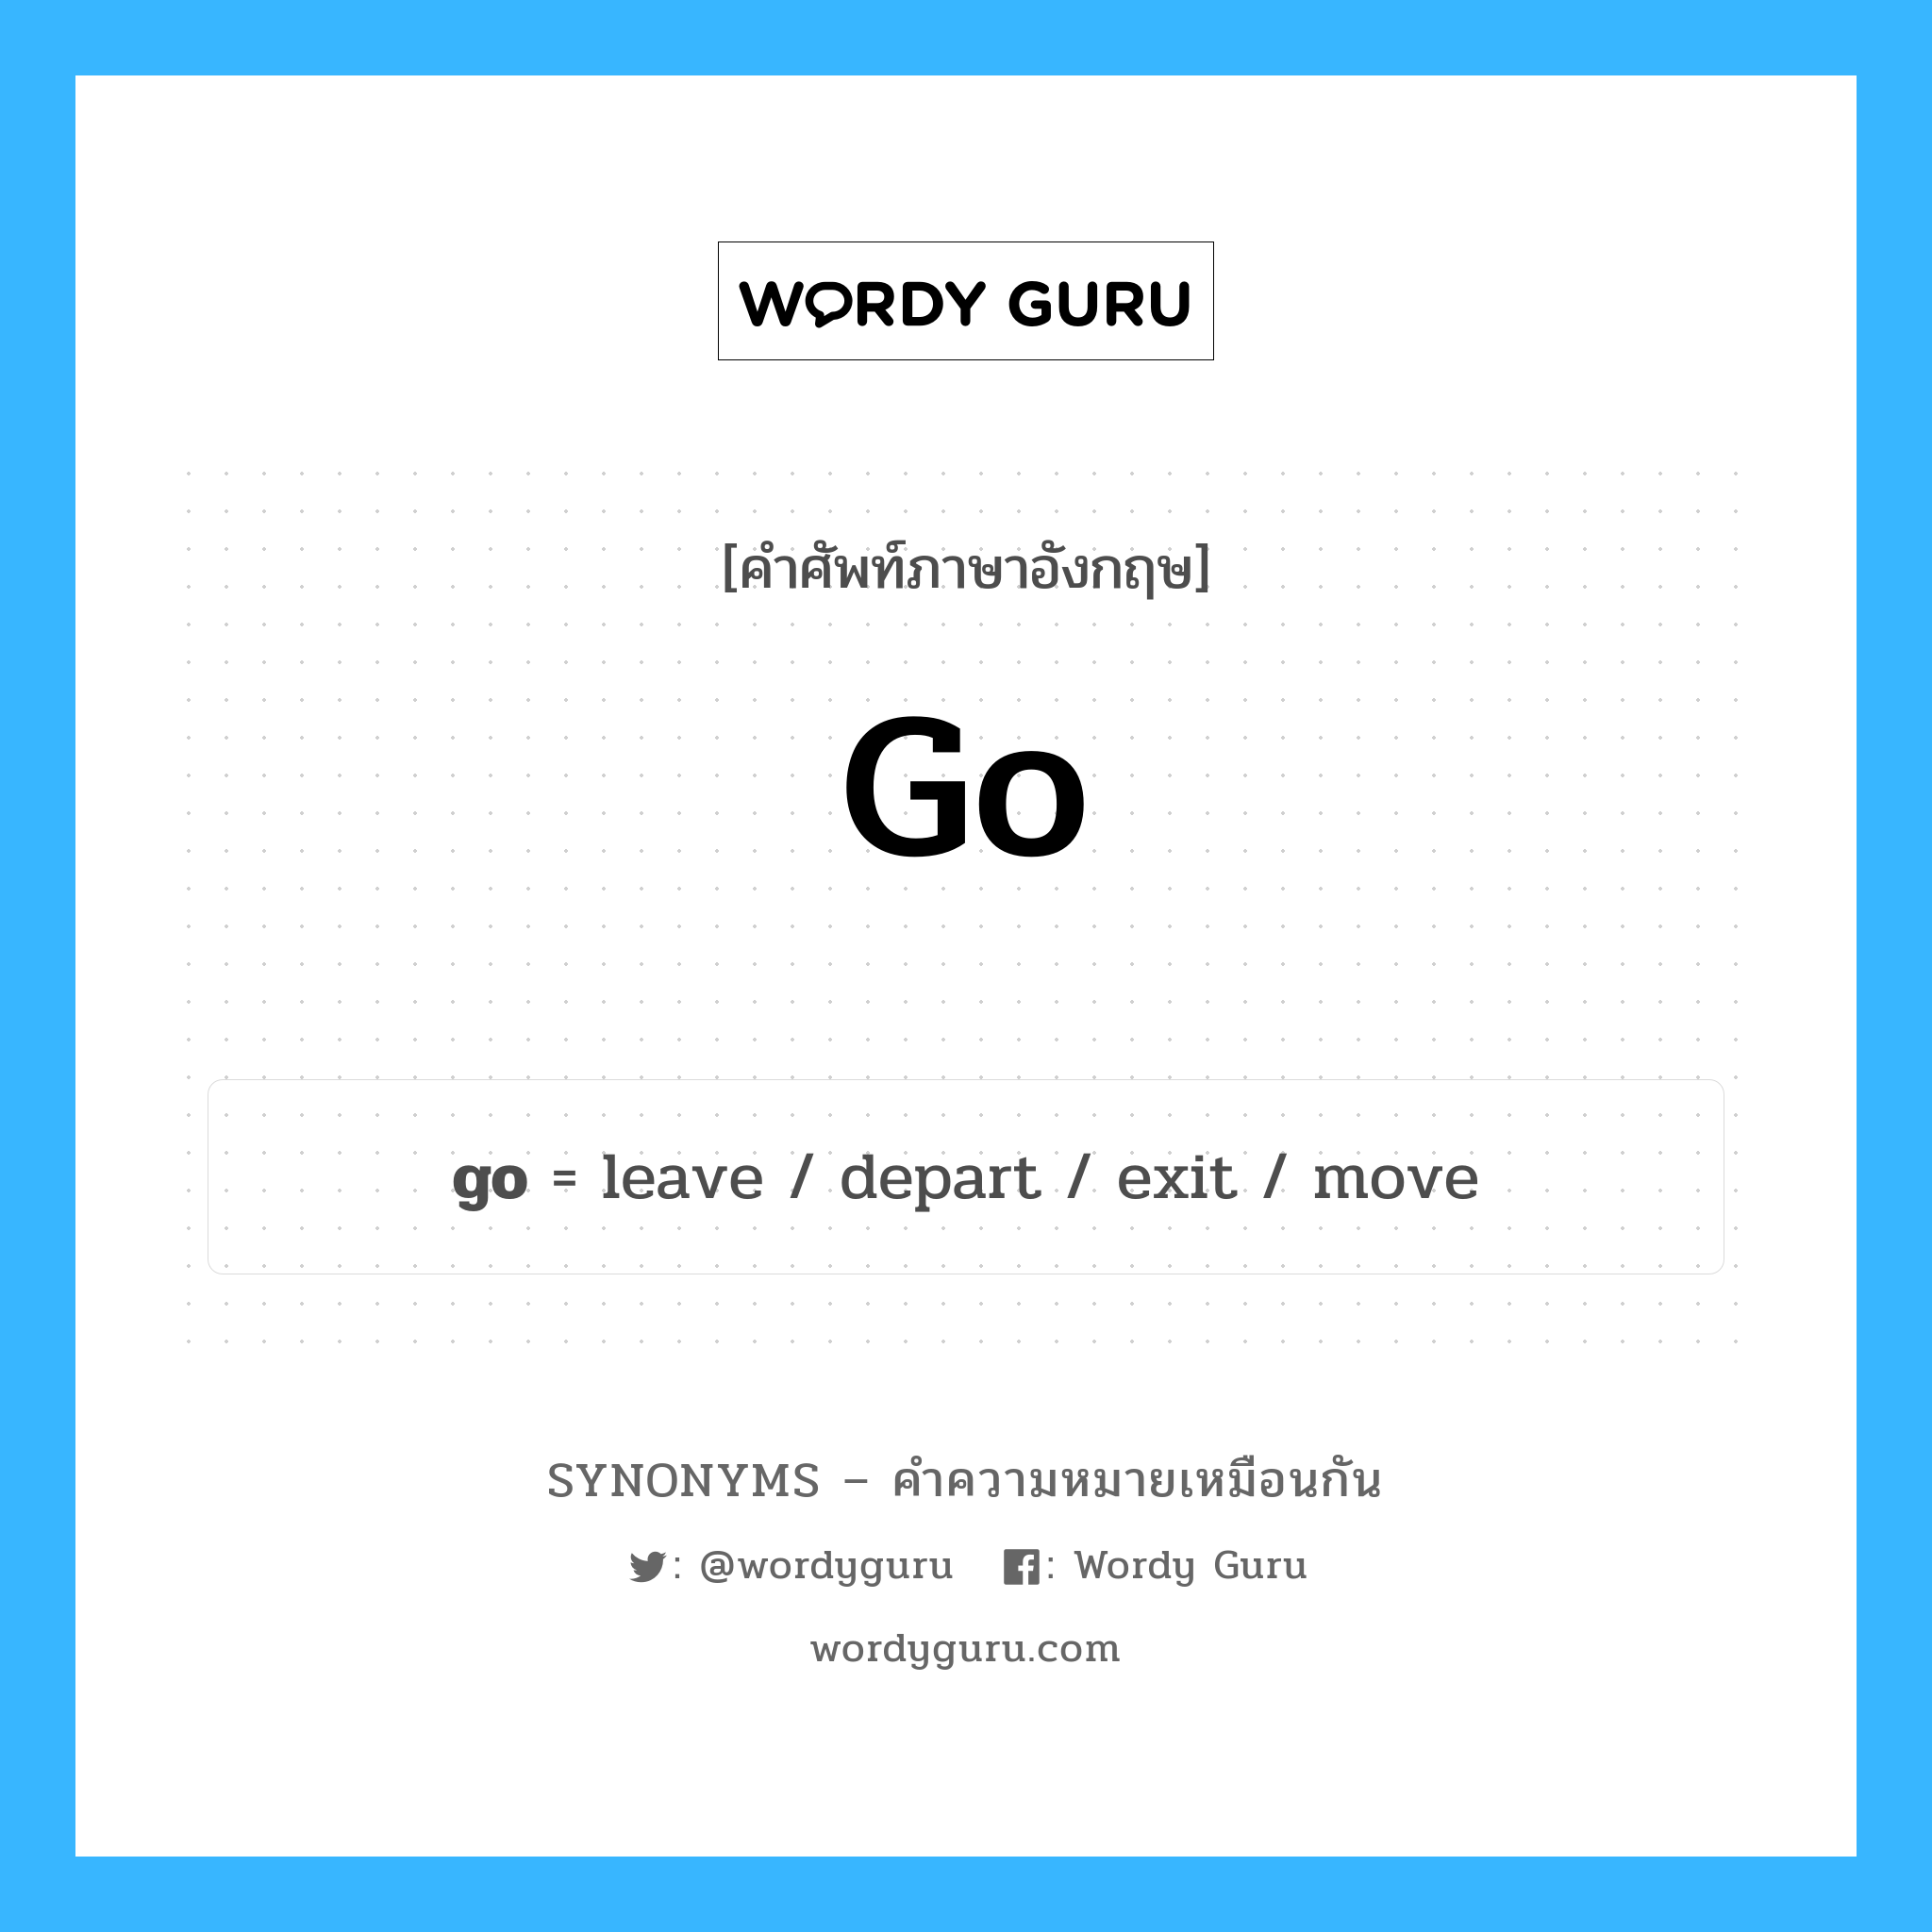 exit เป็นหนึ่งใน go และมีคำอื่น ๆ อีกดังนี้, คำศัพท์ภาษาอังกฤษ exit ความหมายคล้ายกันกับ go แปลว่า ออกจาก หมวด go